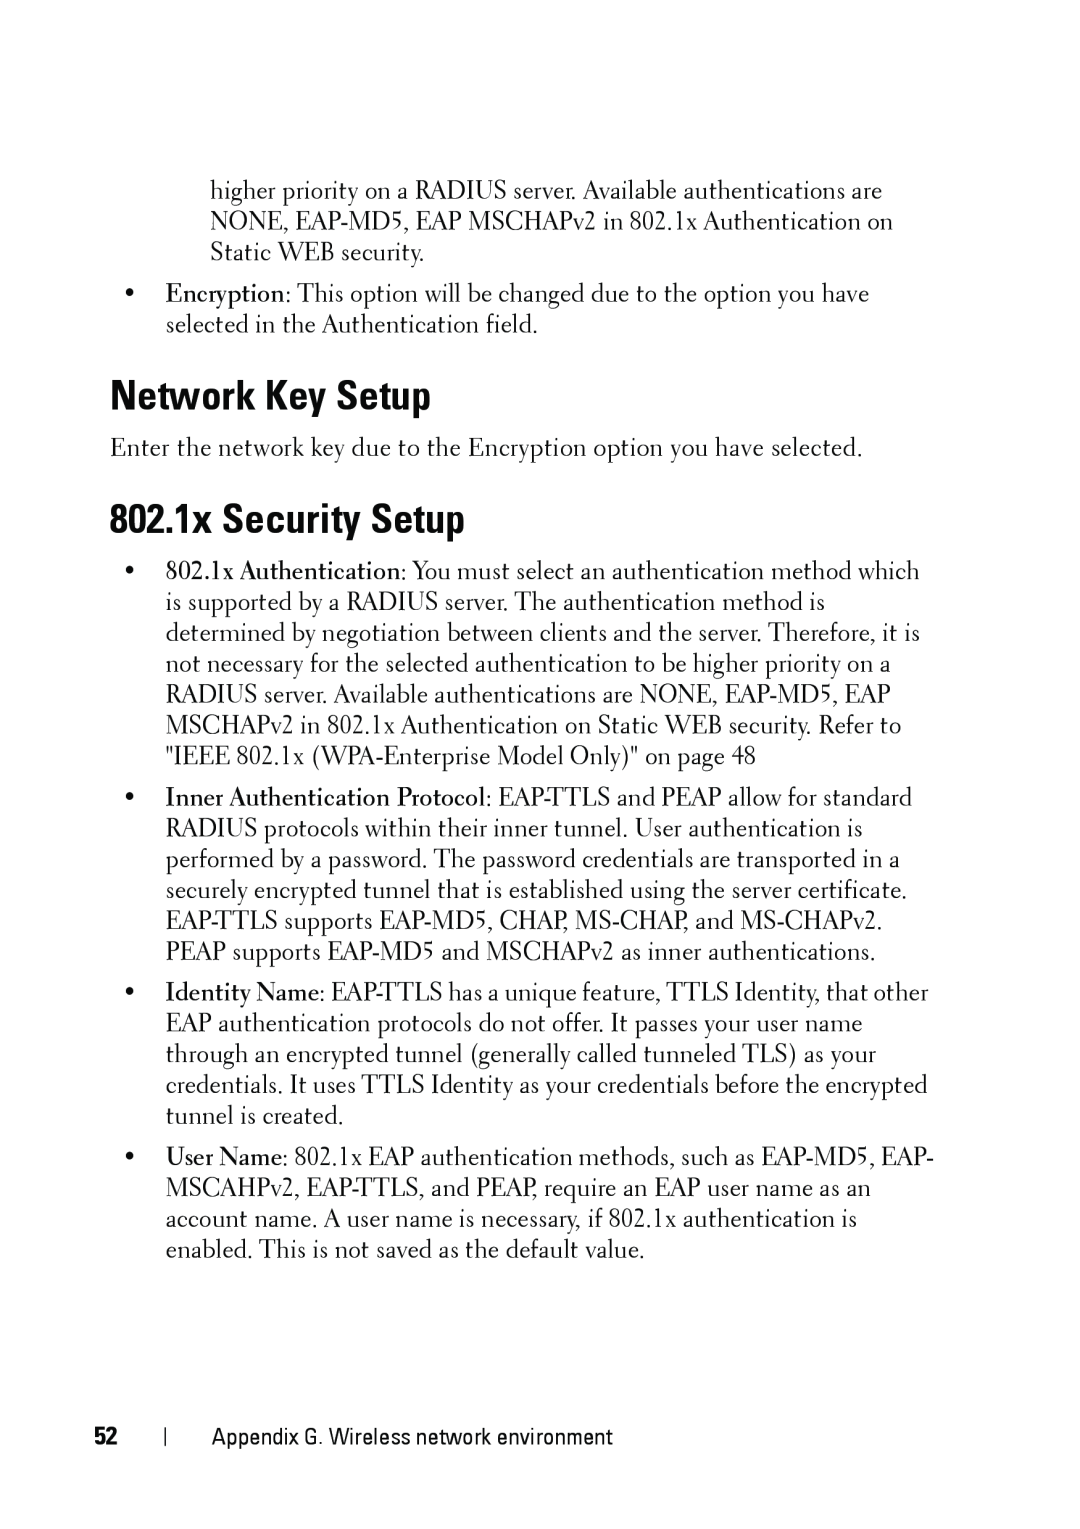 Dell 5002 manual Network Key Setup, 802.1x Security Setup 